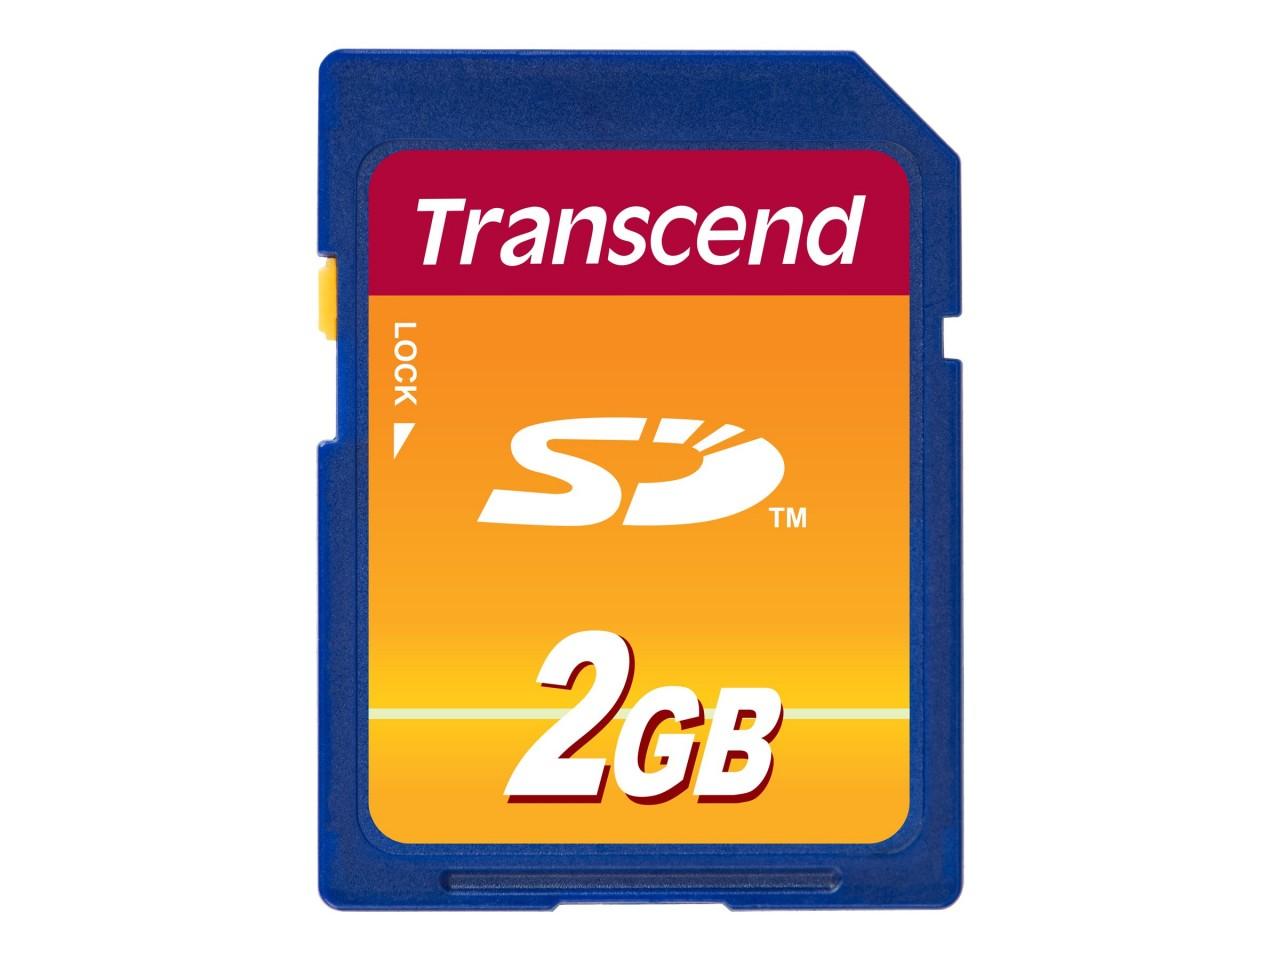 Transcend SD Speicherkarte 2GB